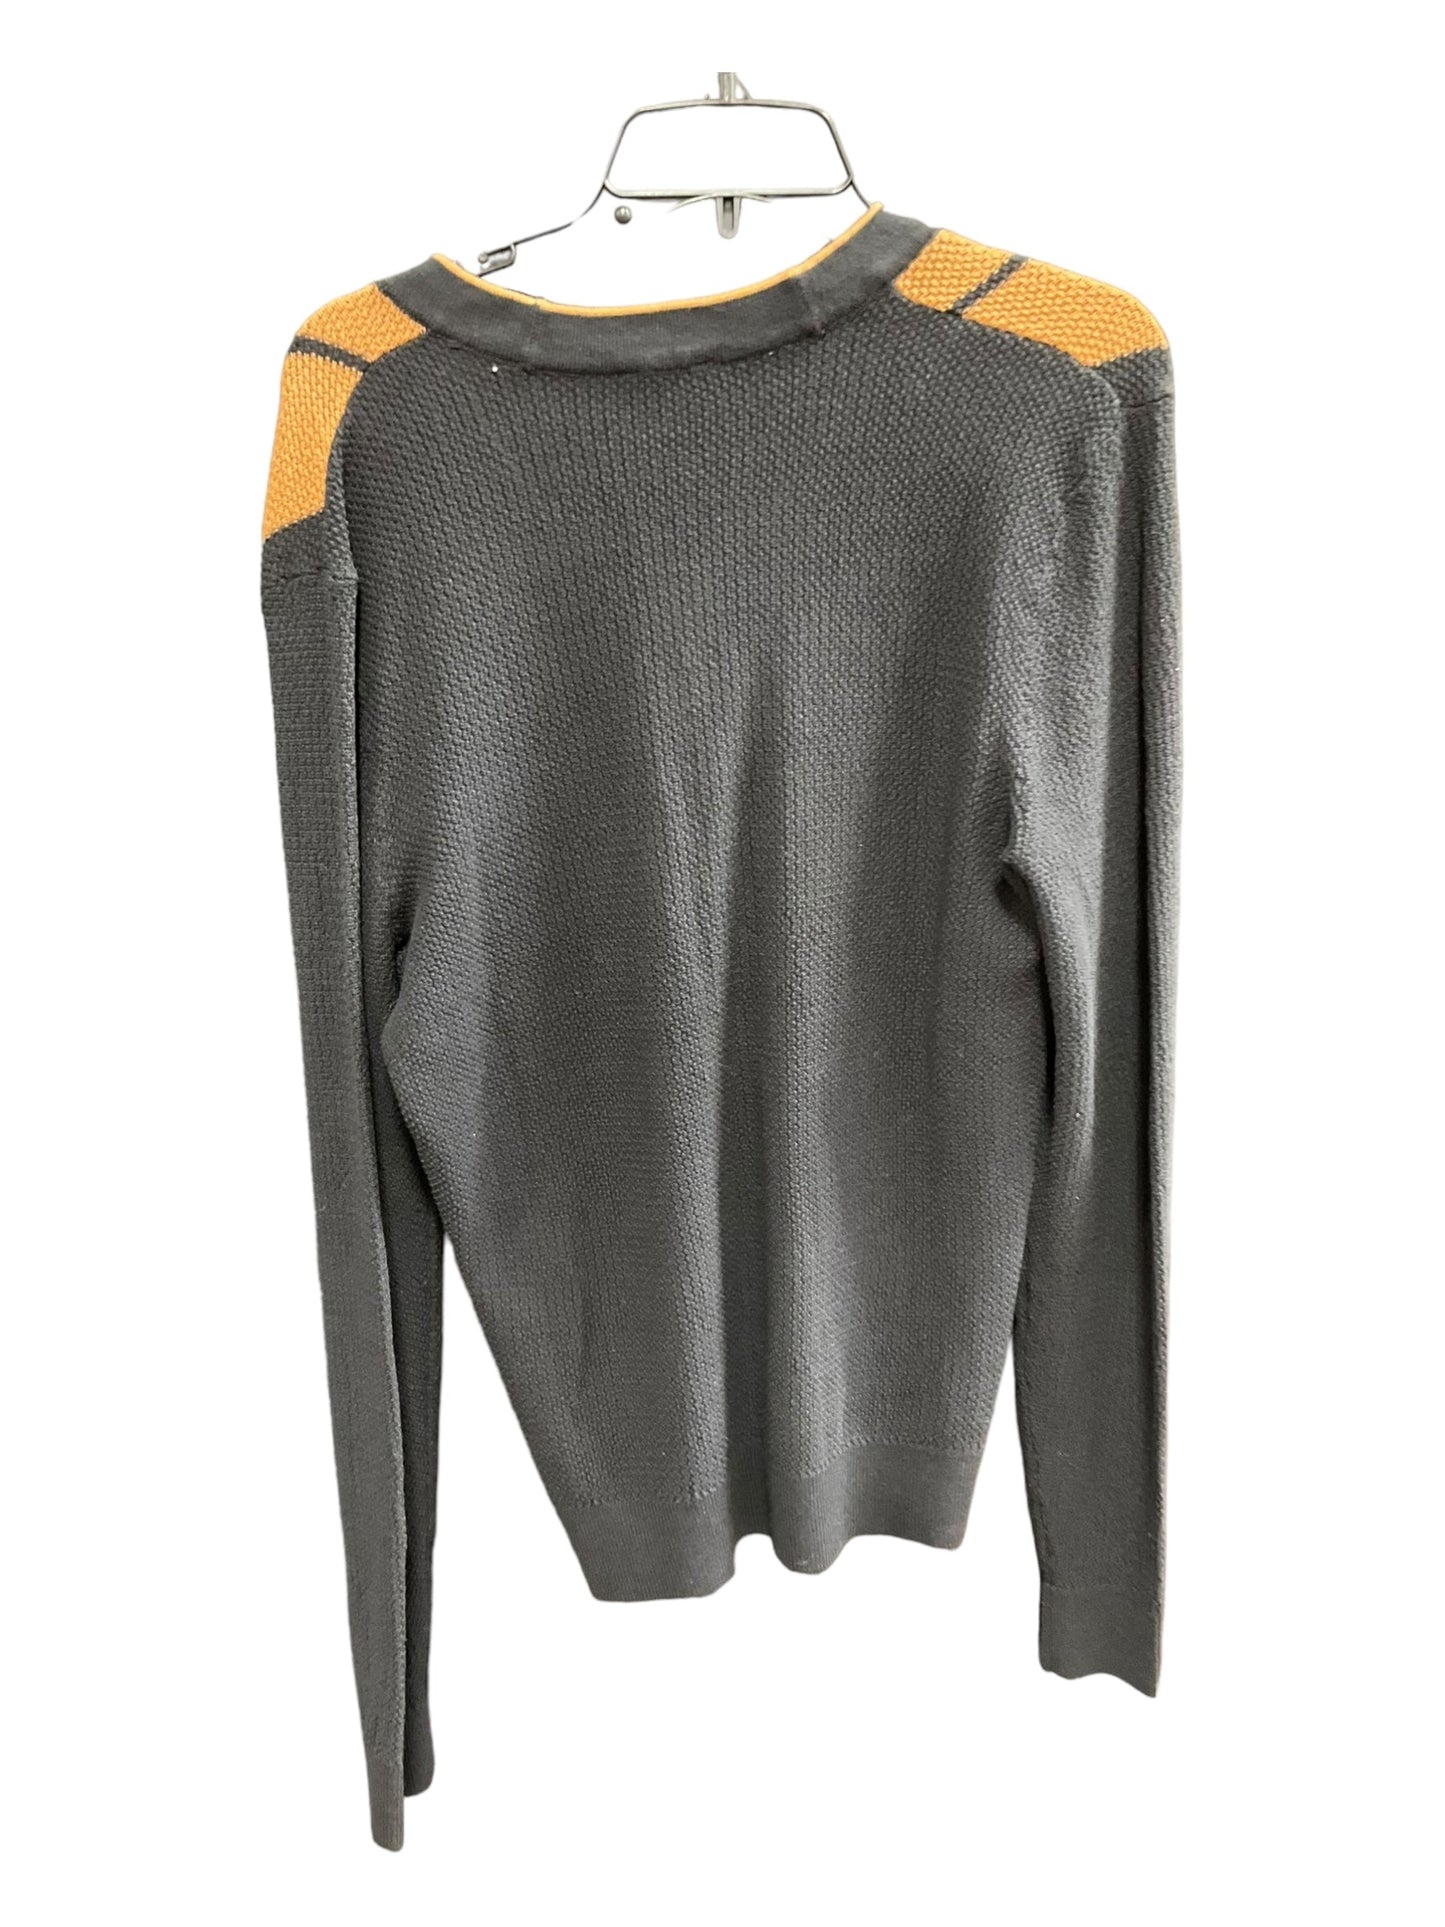 Black & Tan Sweater Cardigan Express, Size S